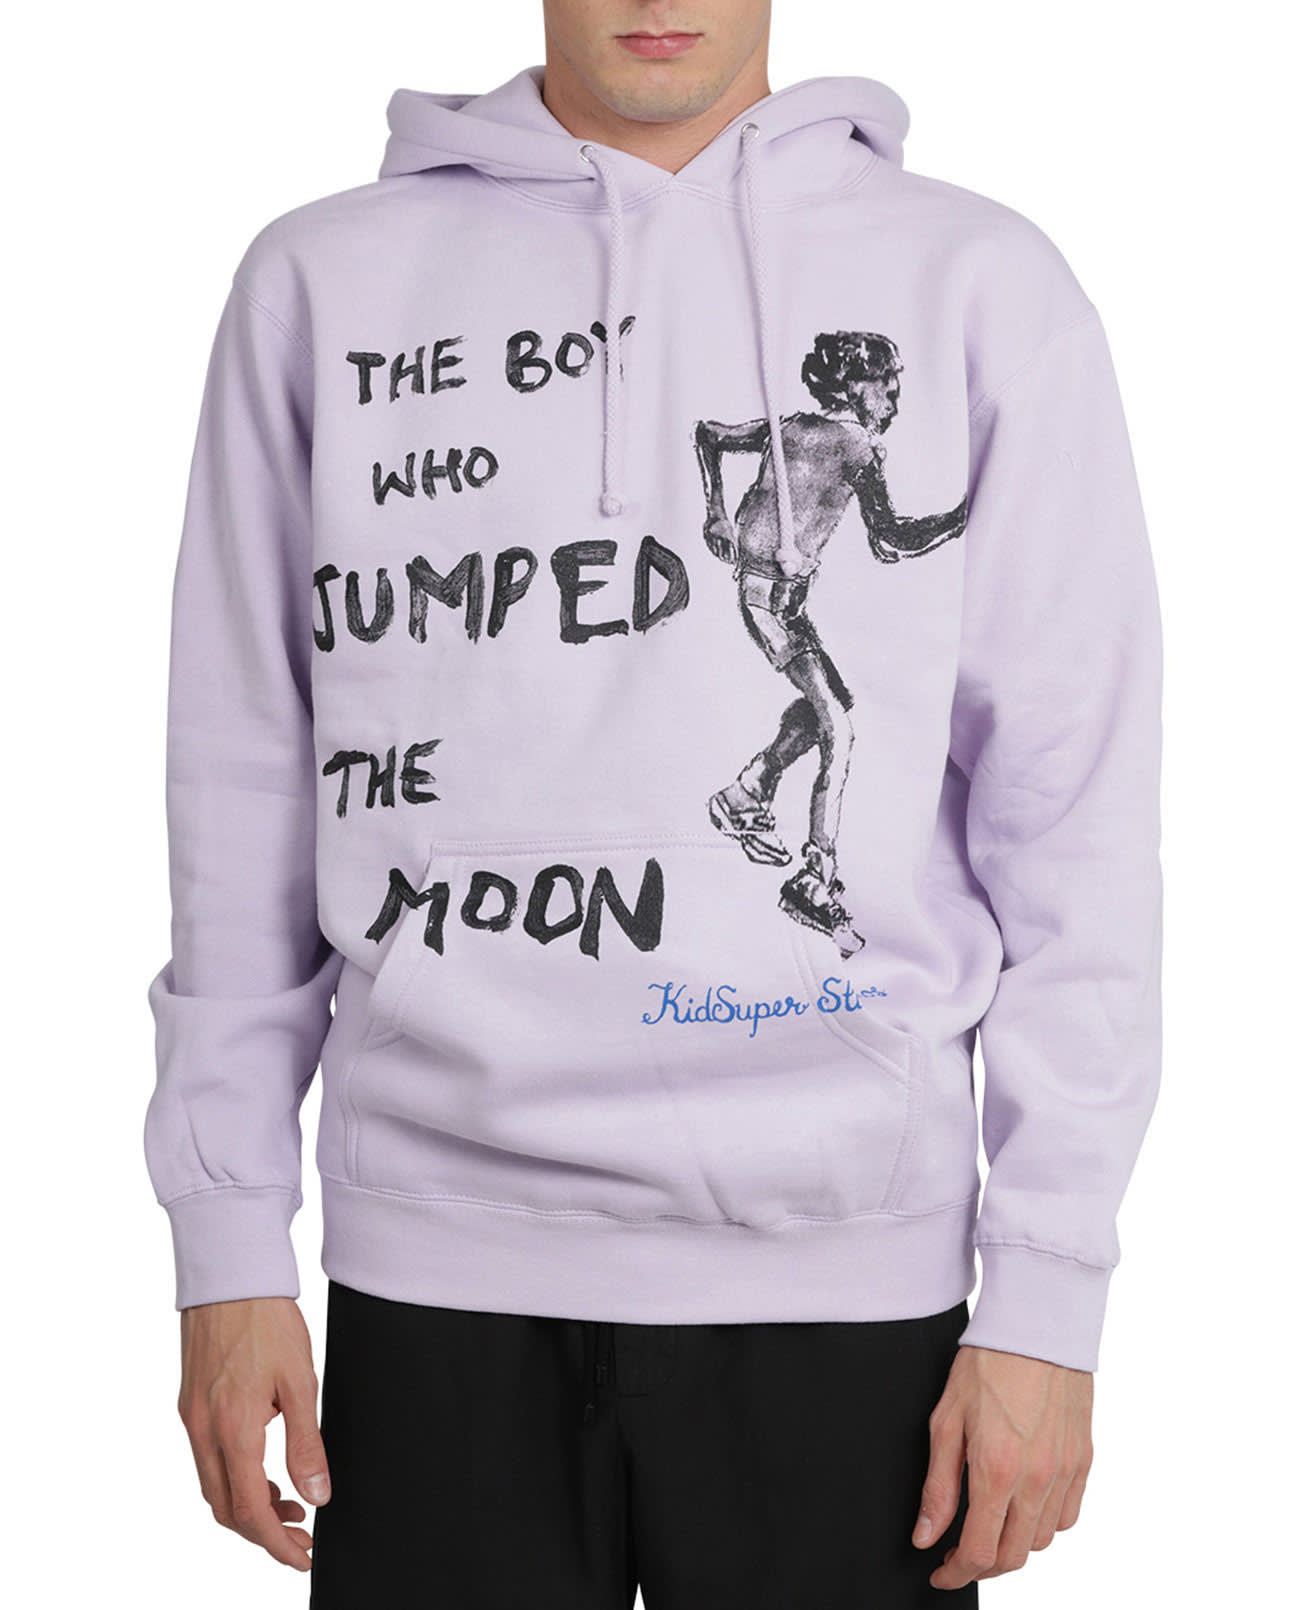 Kidsuper Lilac Jumped The Moon Hoodie